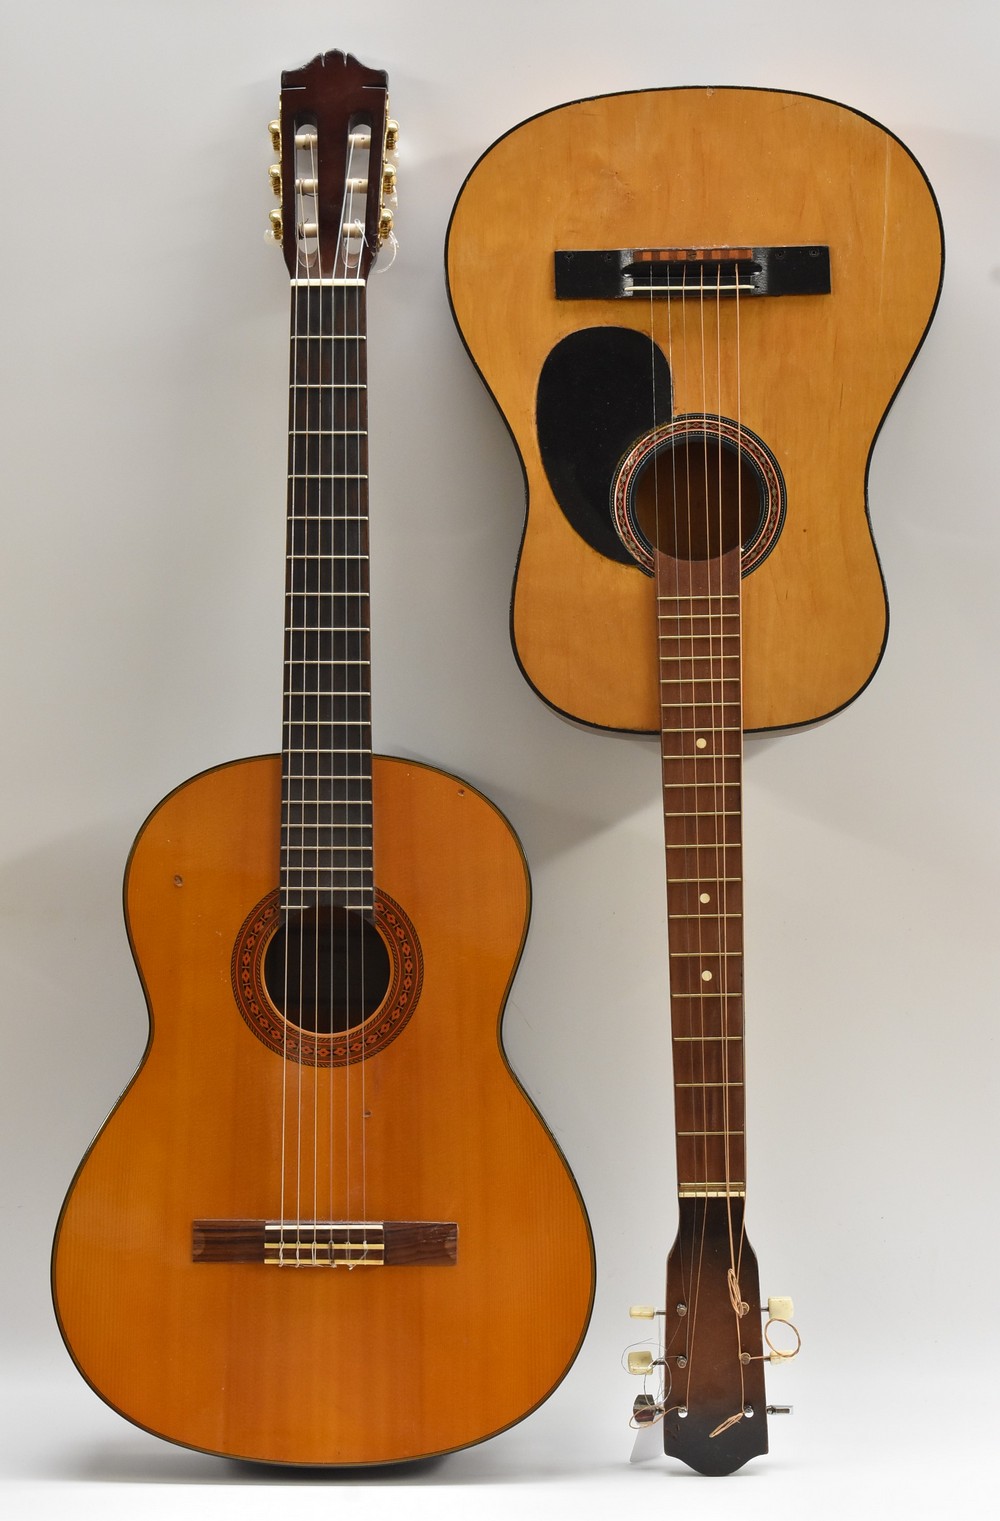 A Yamaha C-70 model Classical Acoustic Guitar;